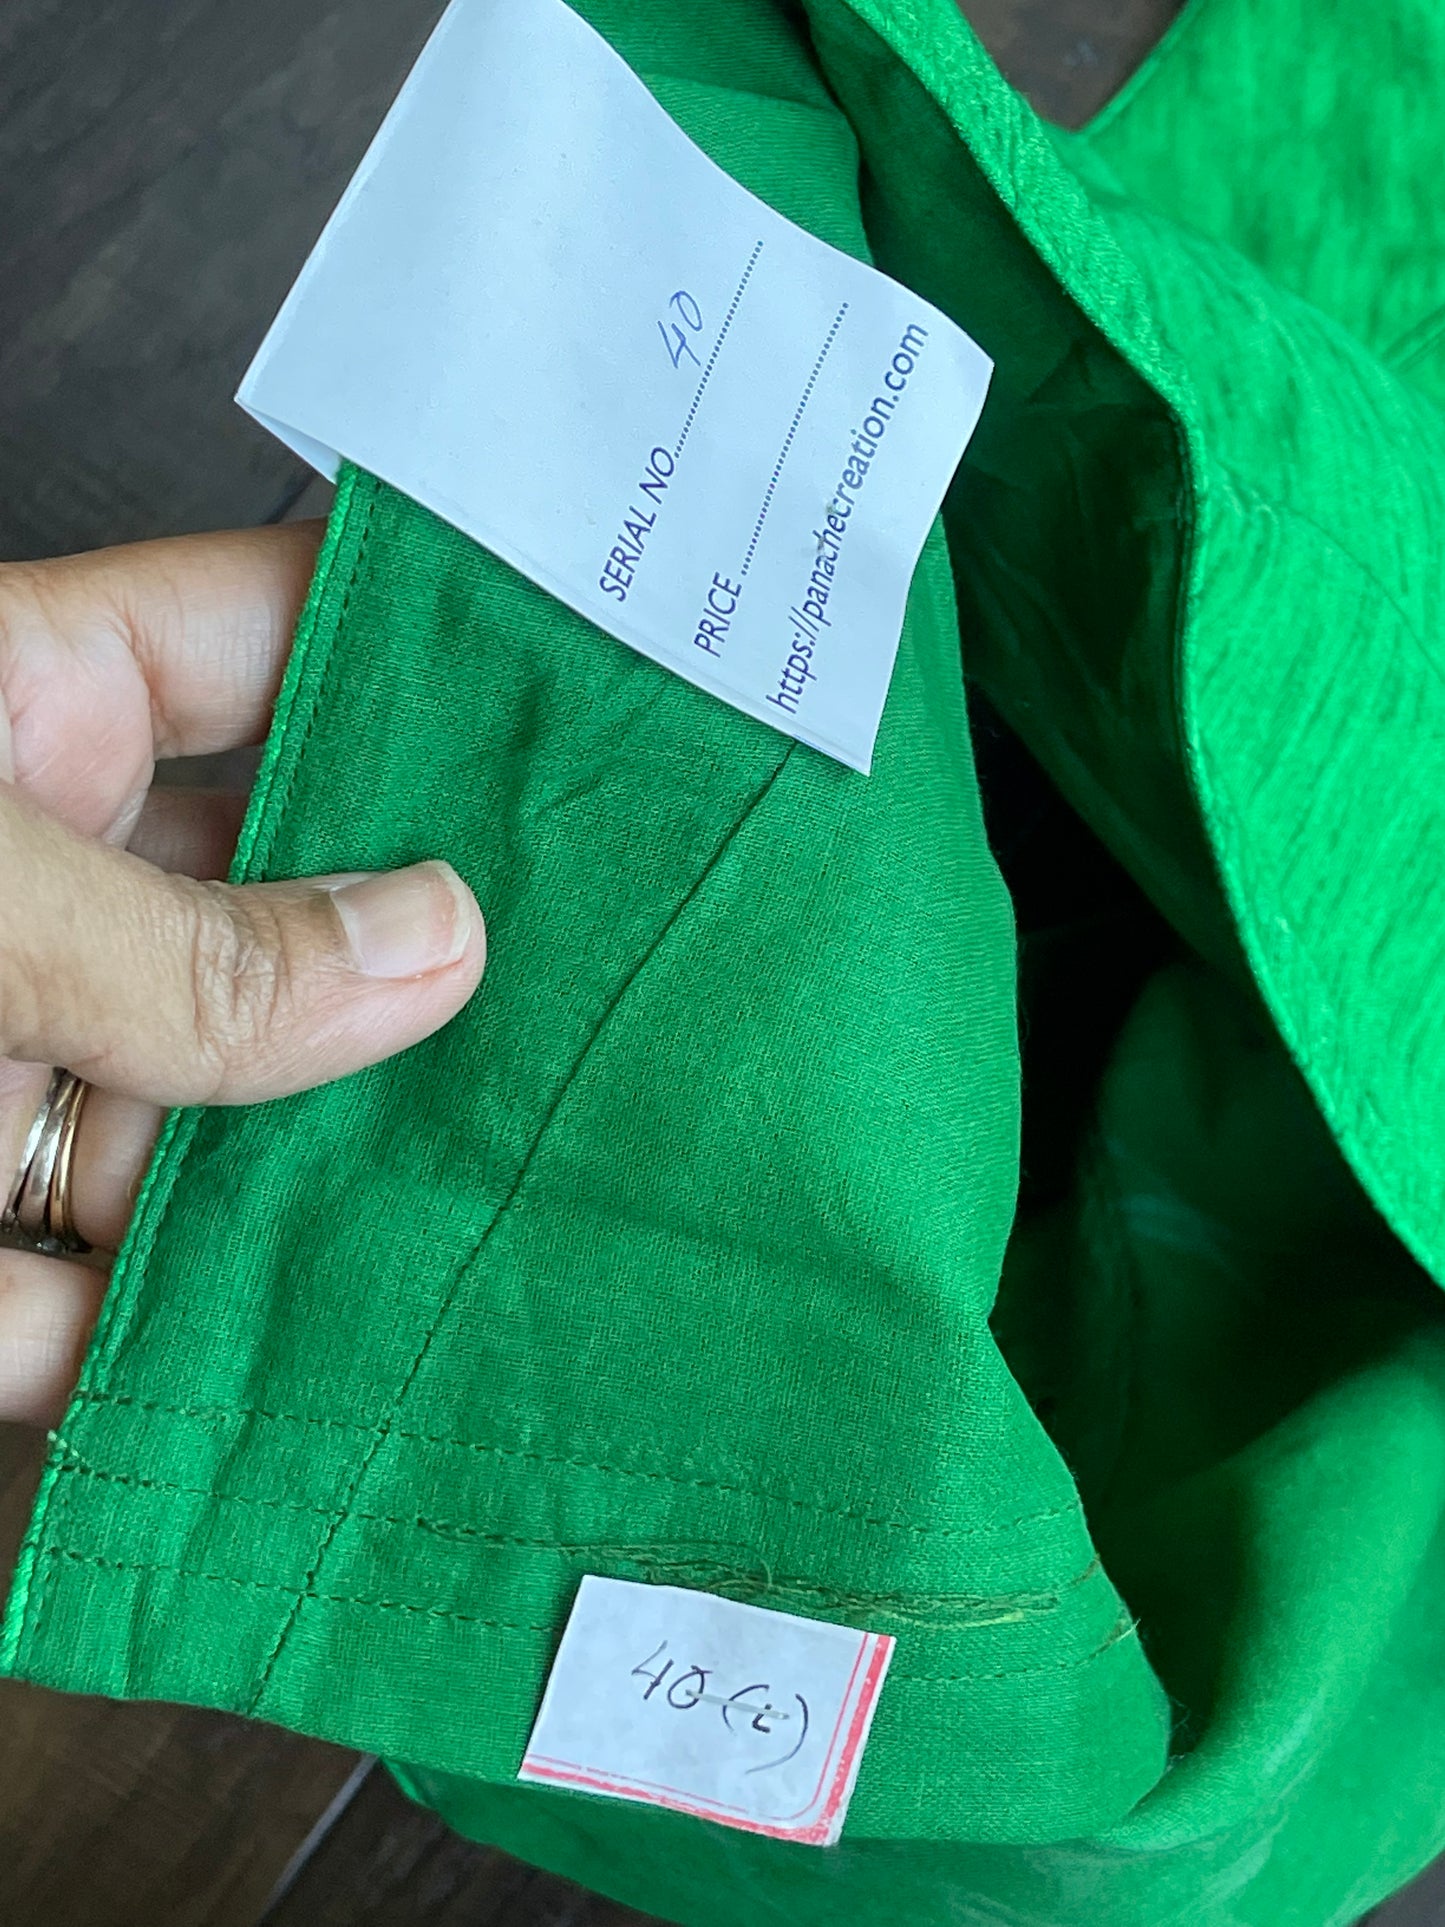 Designer Blouse - Green Raw Silk